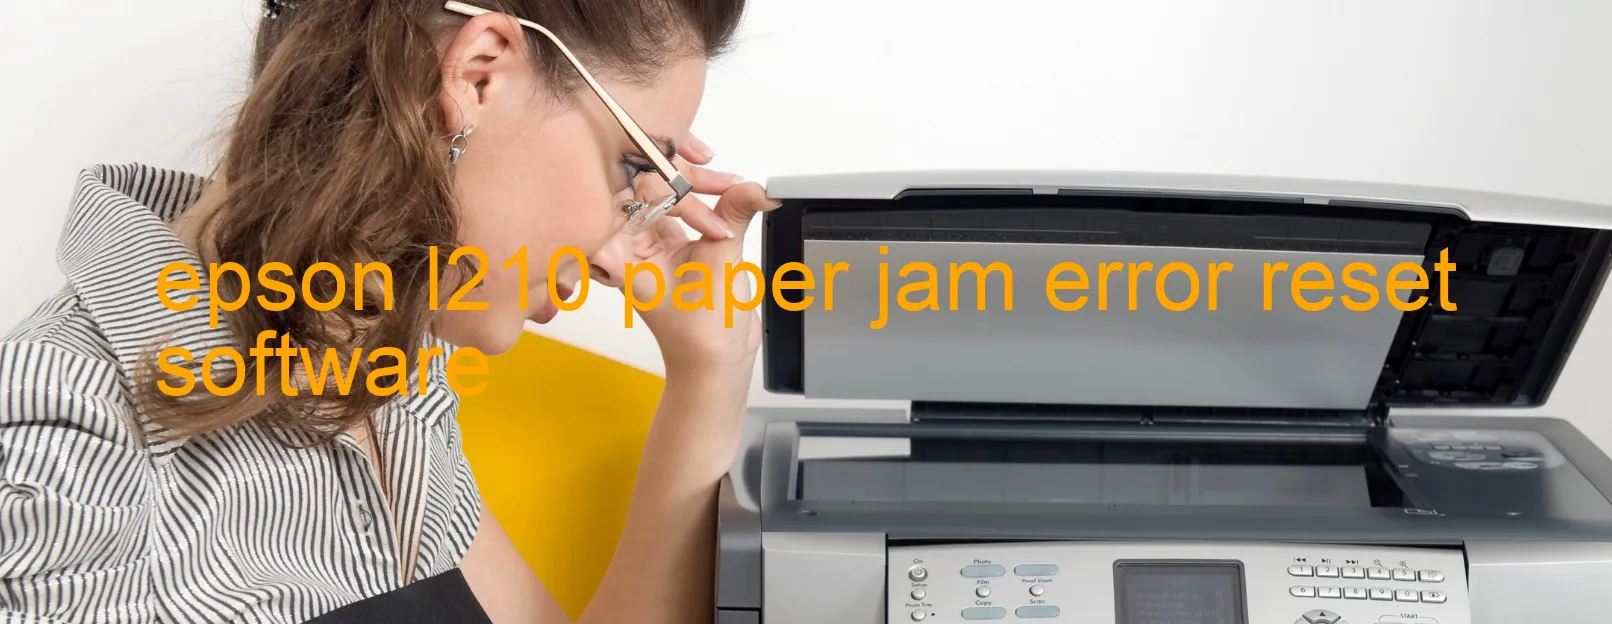 epson l210 paper jam error reset software